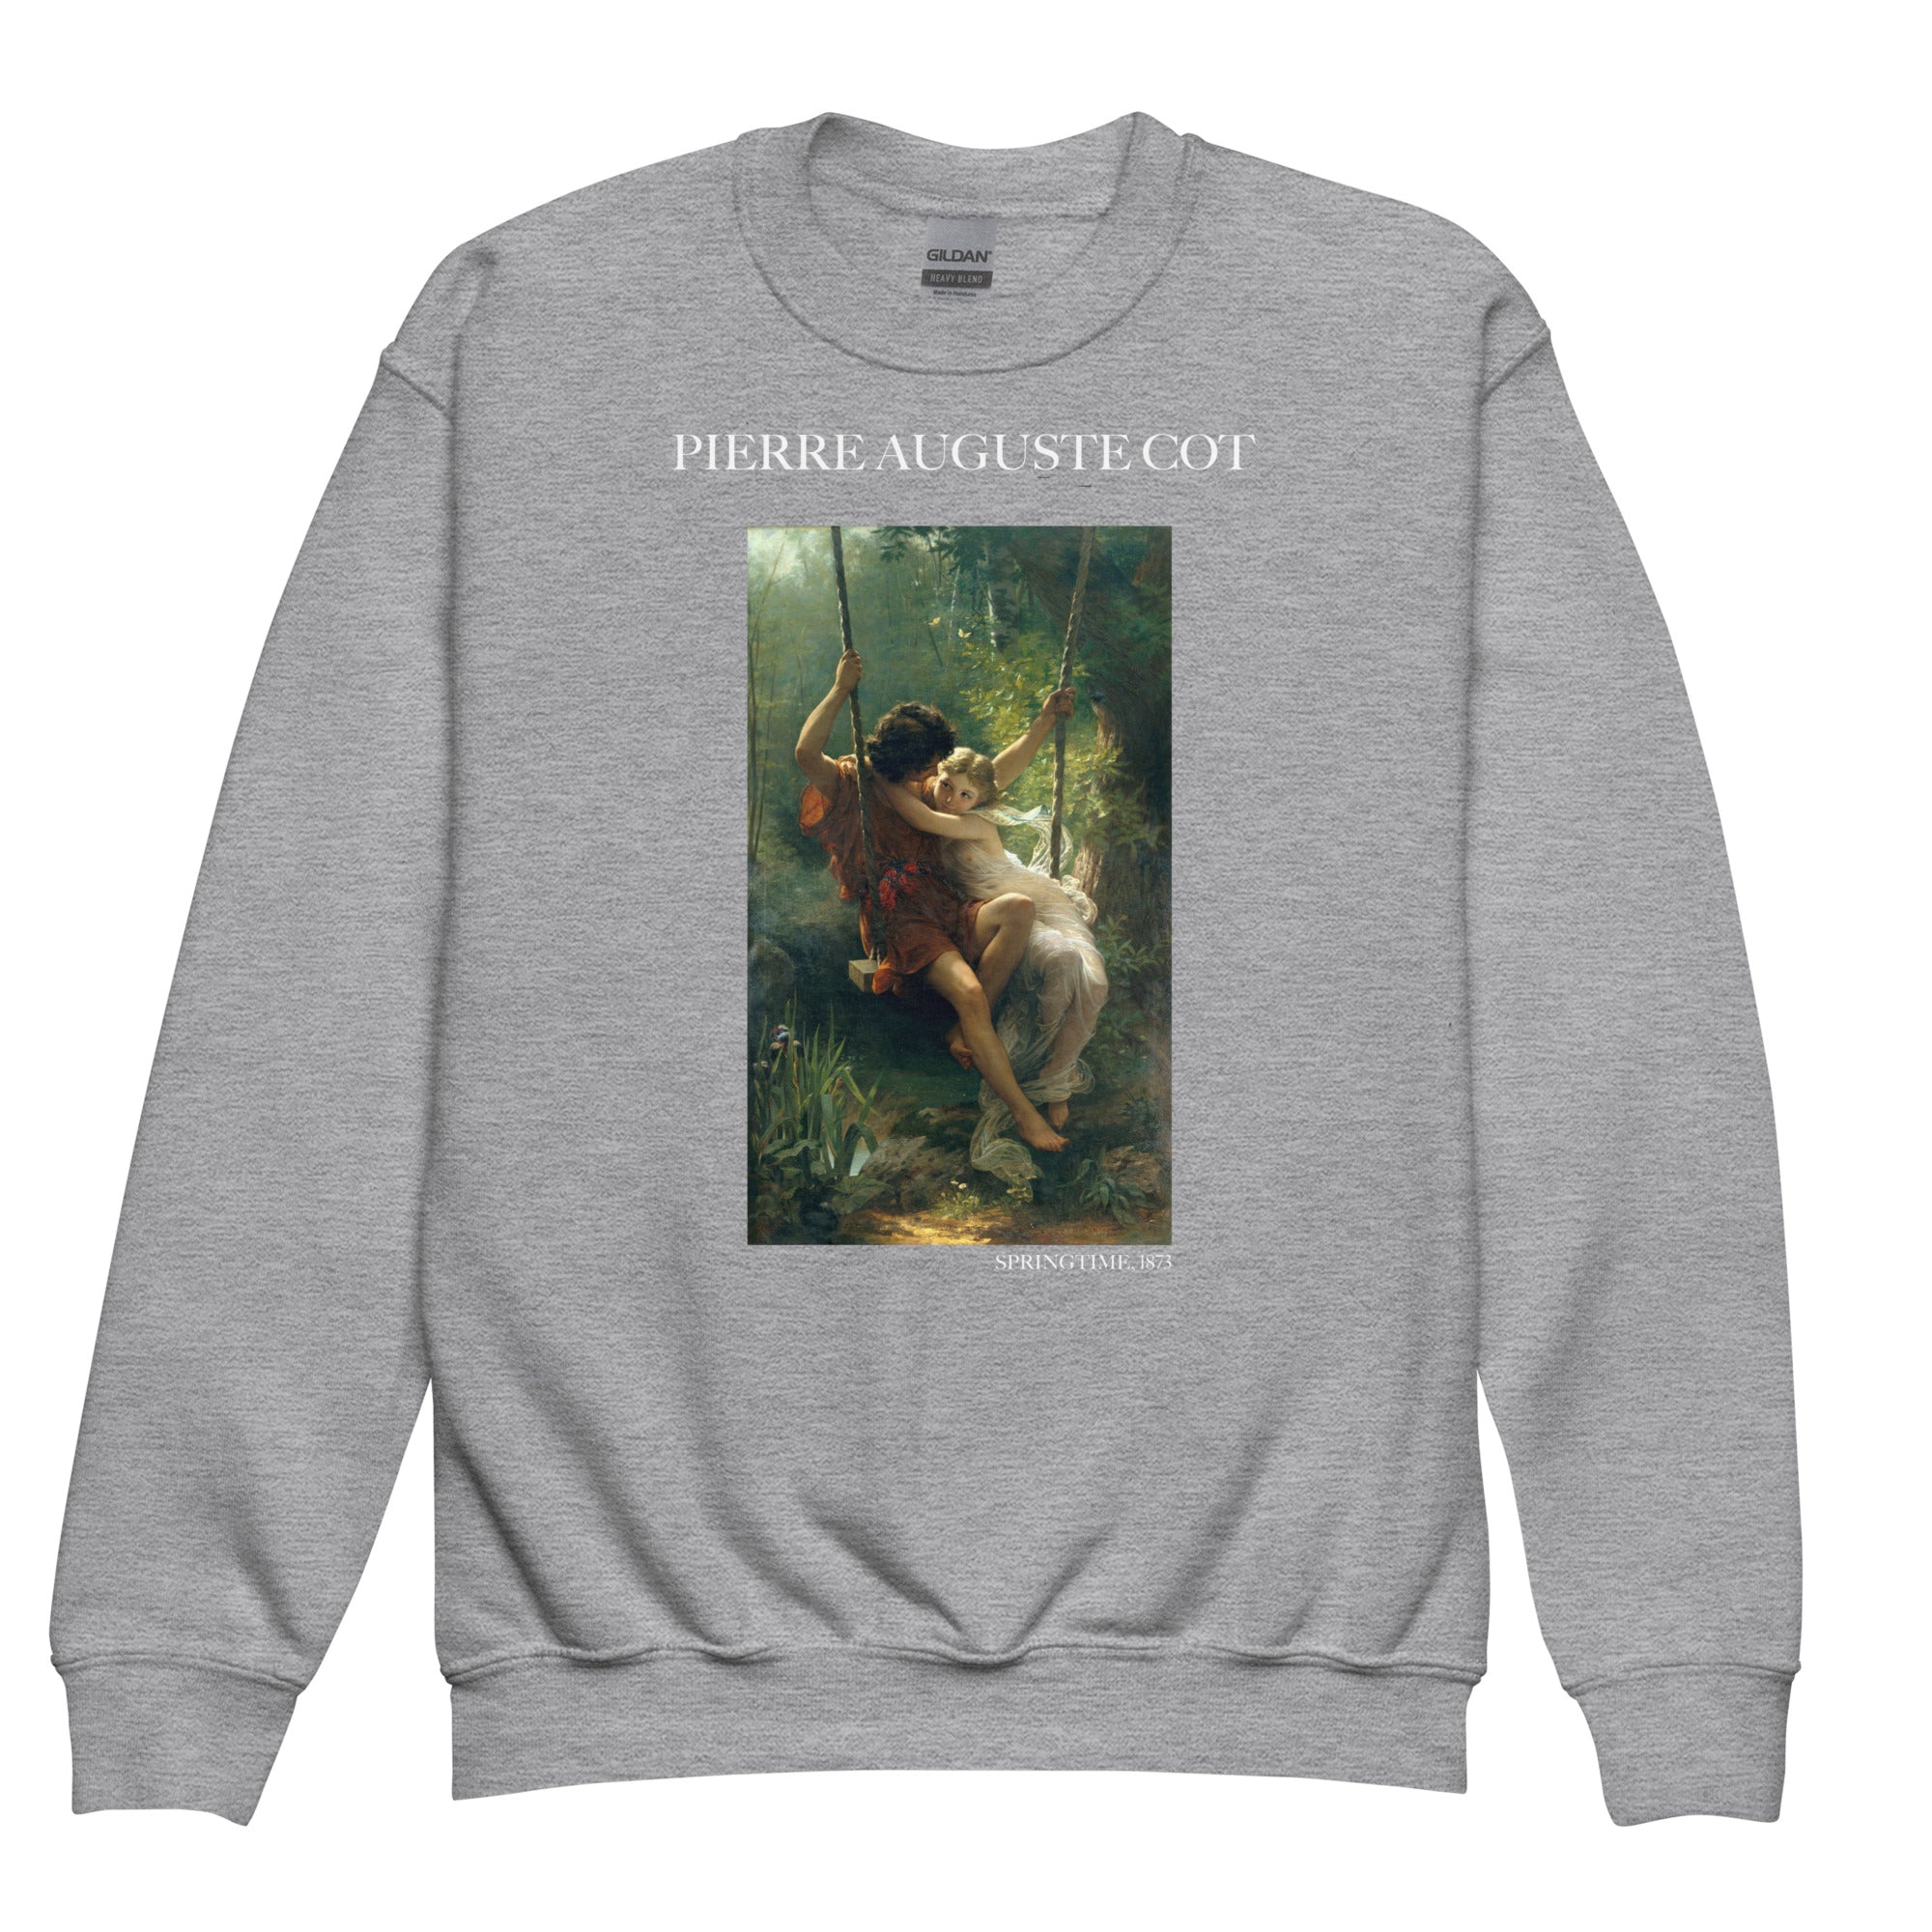 Pierre Auguste Cot 'Springtime' Famous Painting Crewneck Sweatshirt | Premium Youth Art Sweatshirt